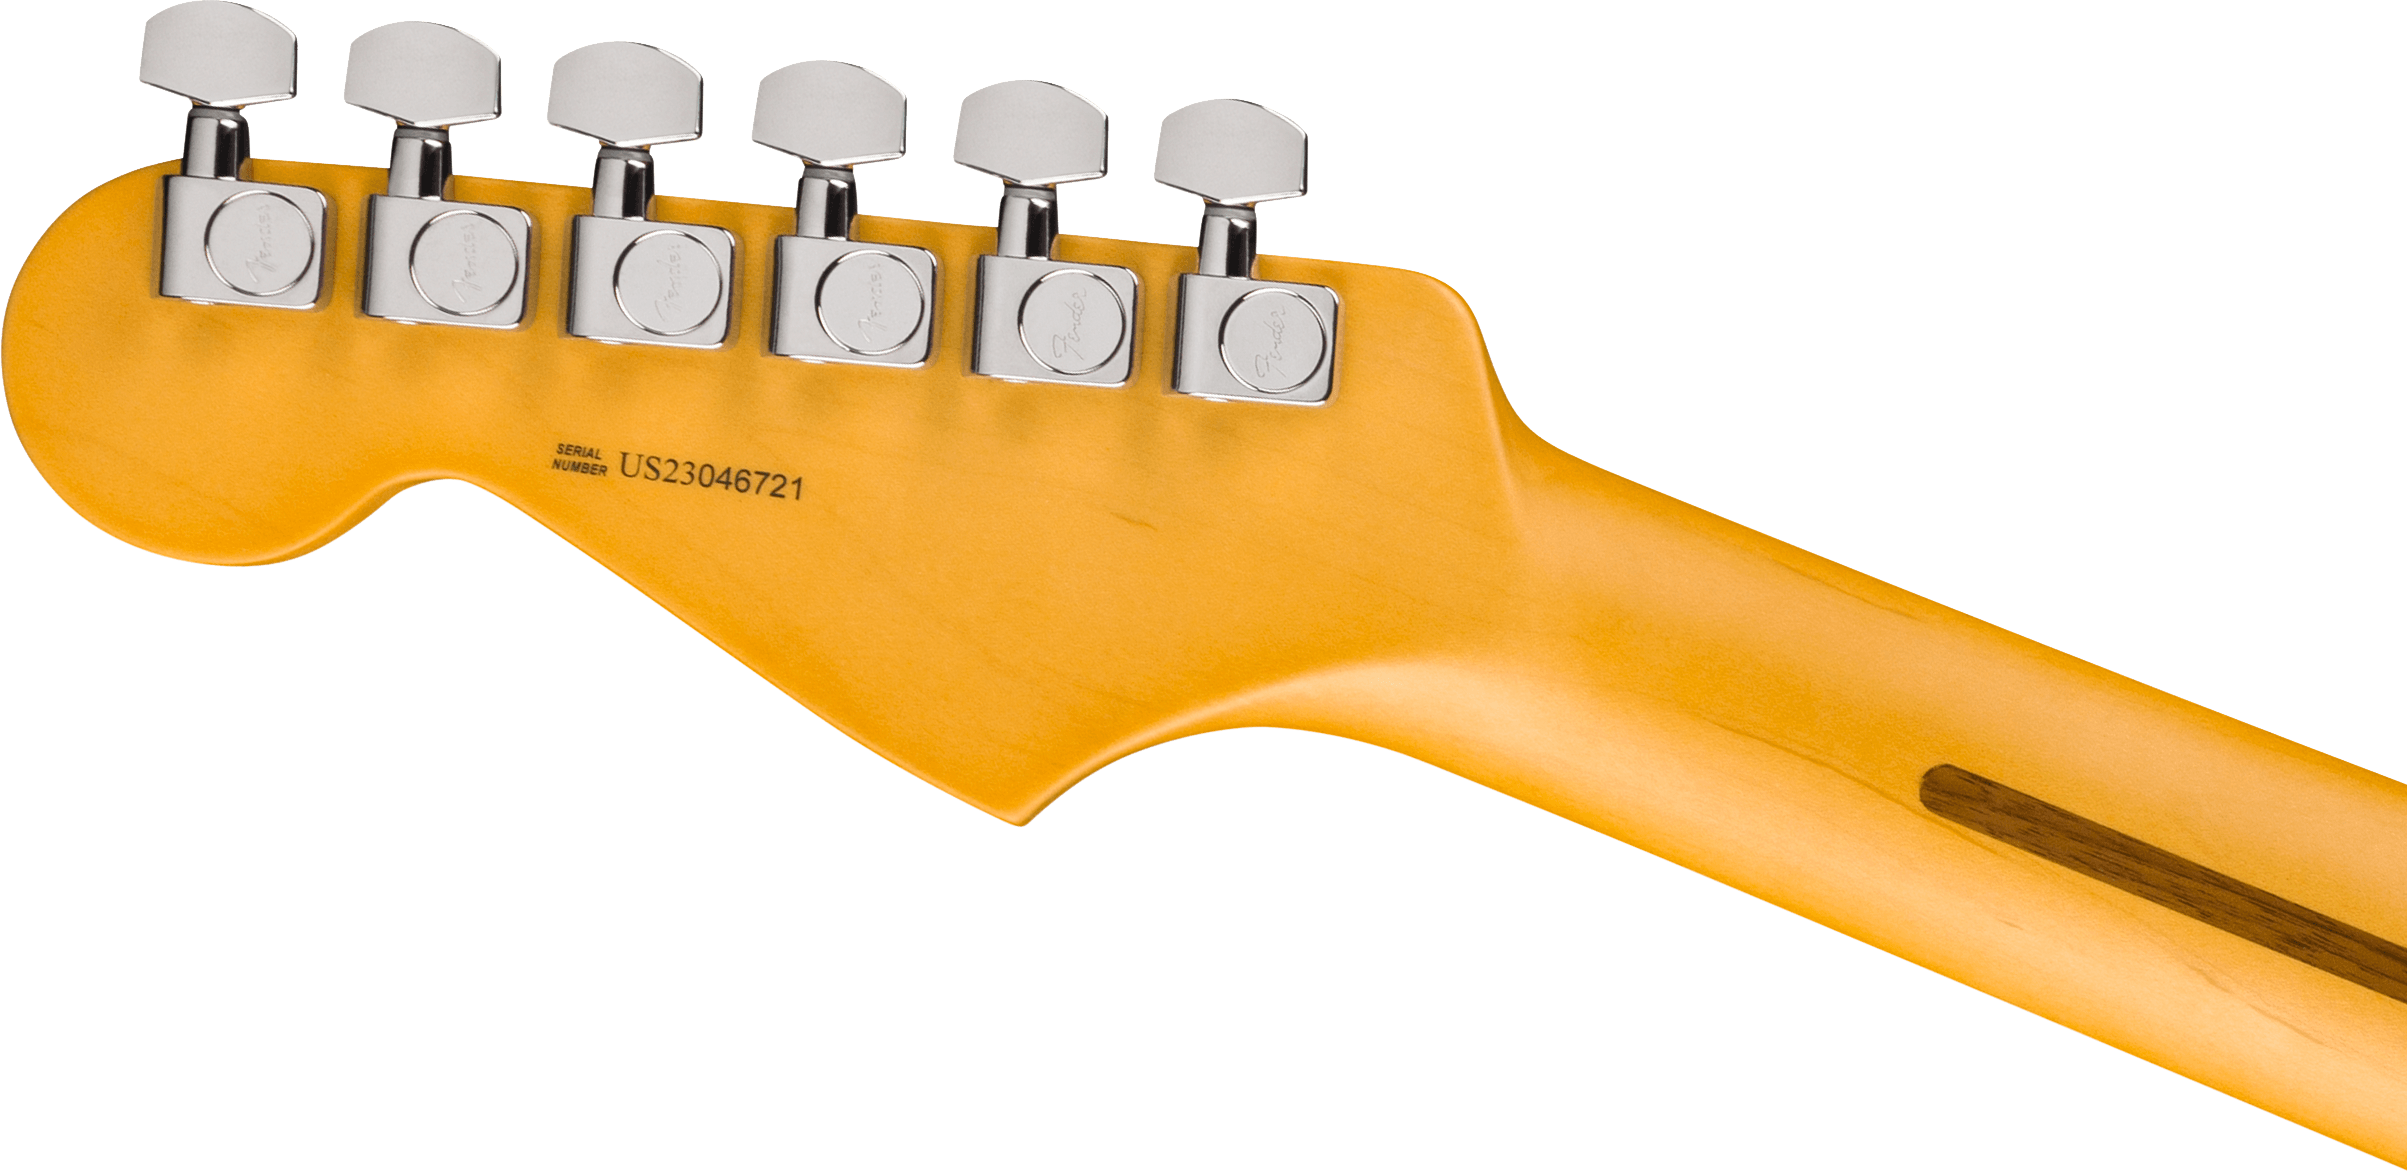 Fender American Professional II Stratocaster, Rosewood Fingerboard, Anniversary 2-Colour Sunburst - Regent Sounds